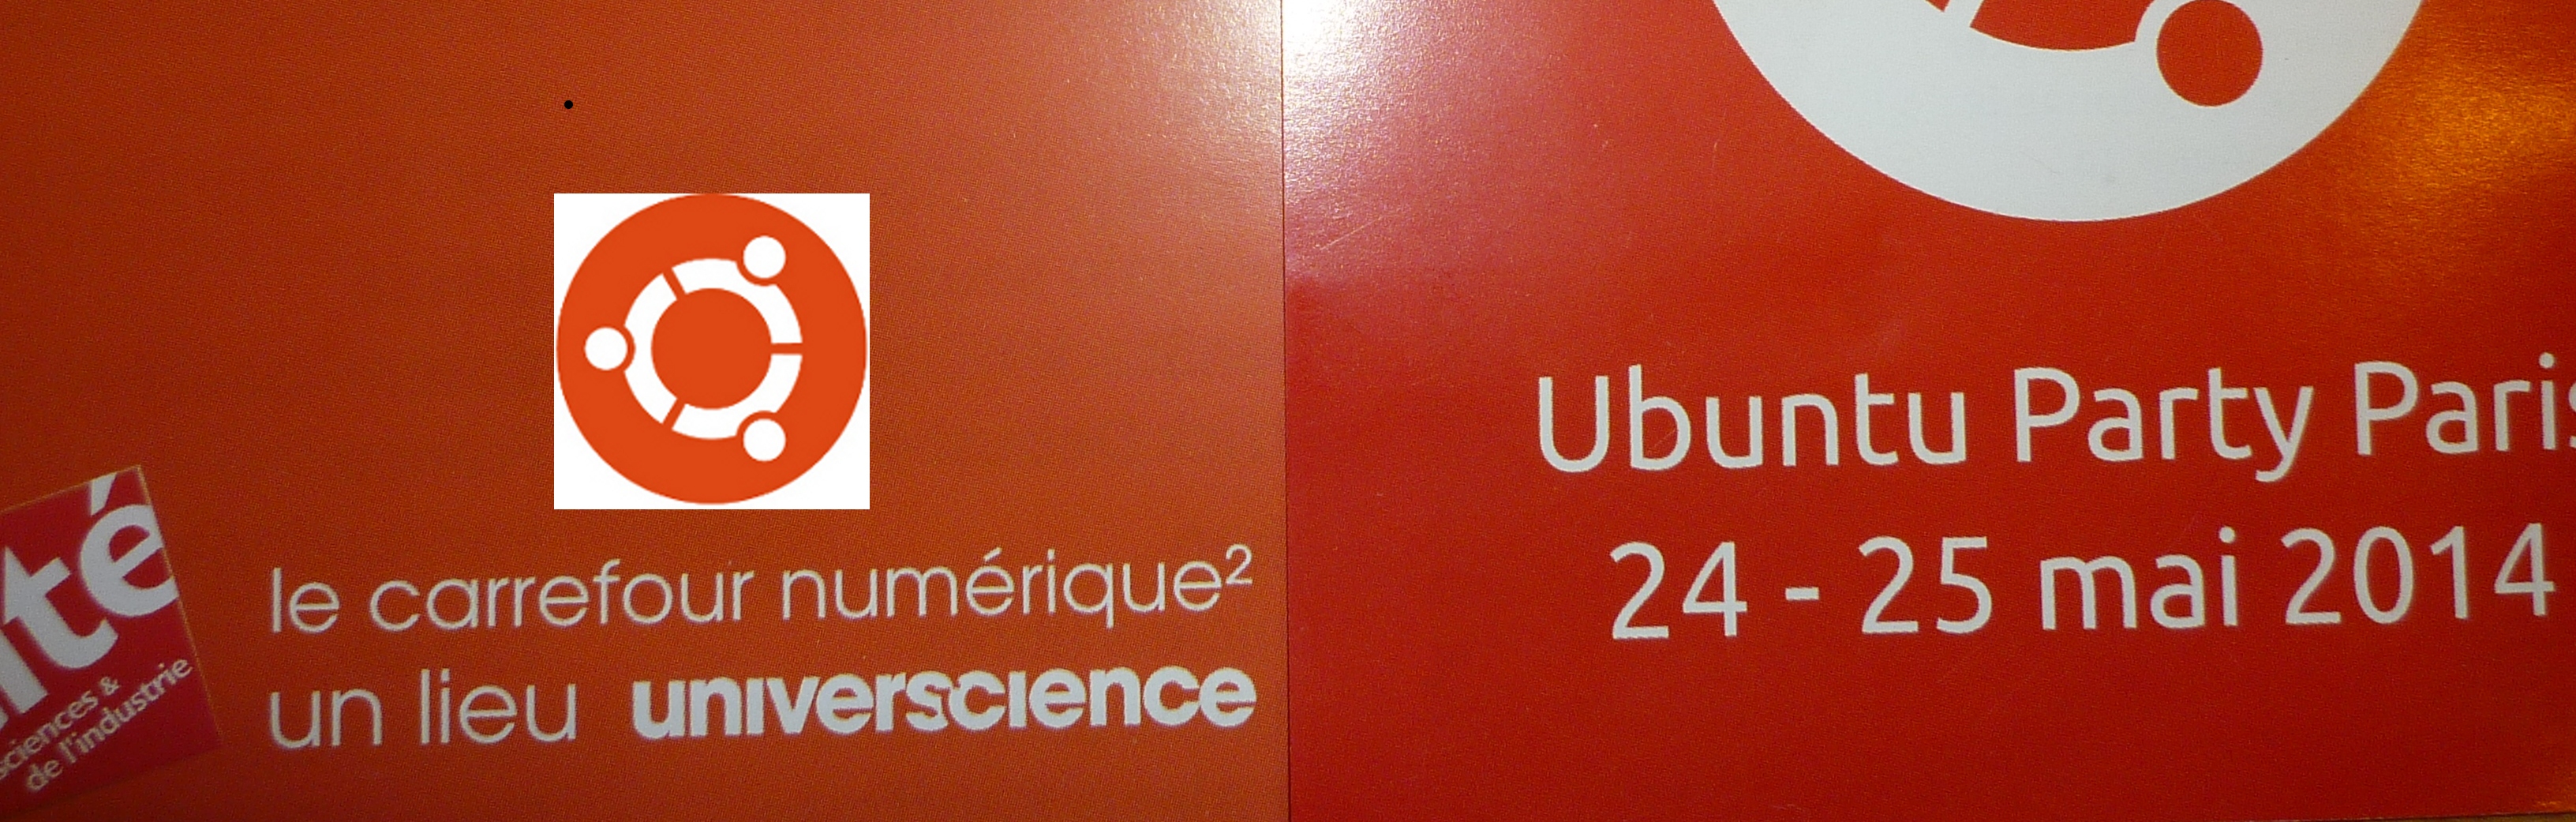 Logo d'Ubuntu et flayers de l'Ubuntu Party de mai 2014 à Paris